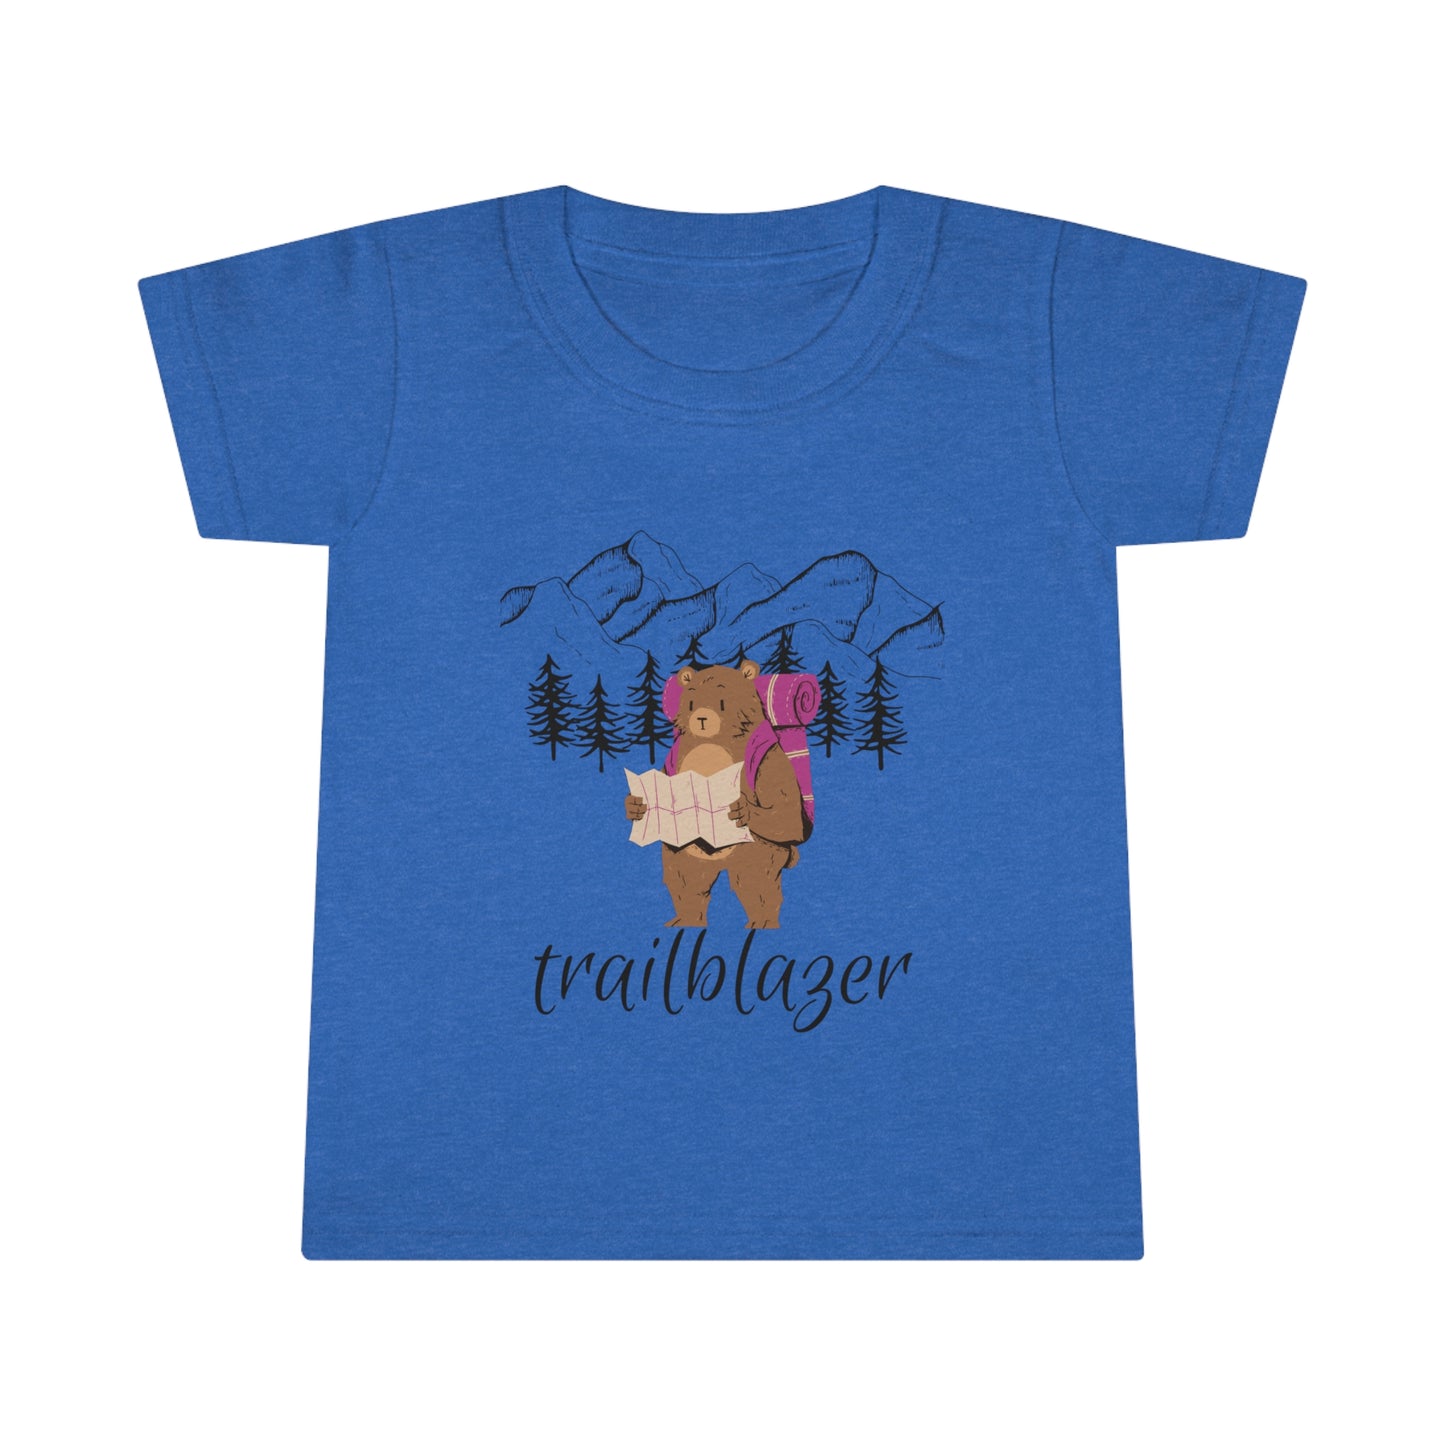 Trailblazer - Toddler T-shirt